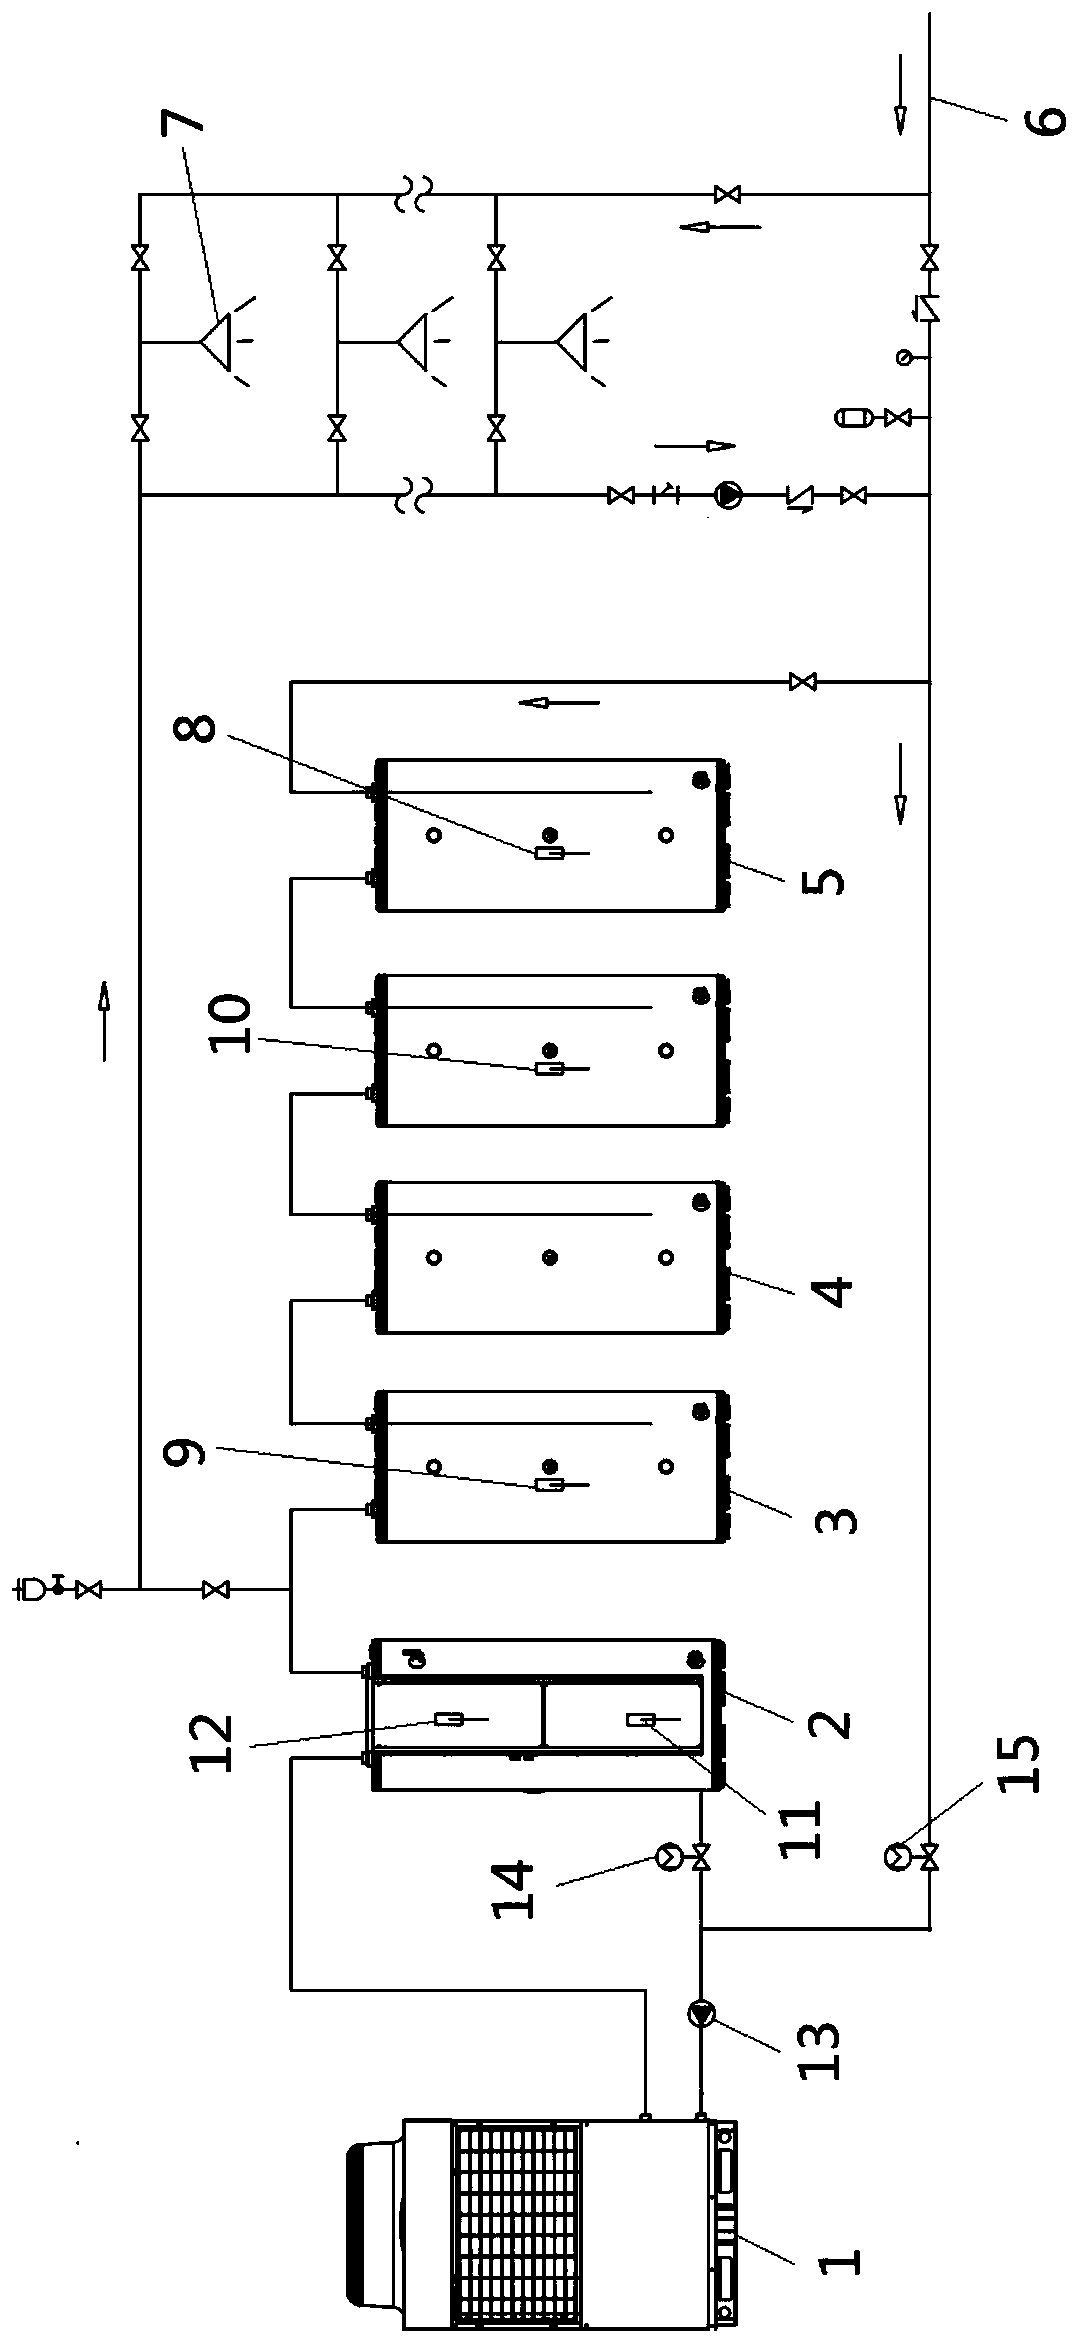 Control method of heating pressure bearing system